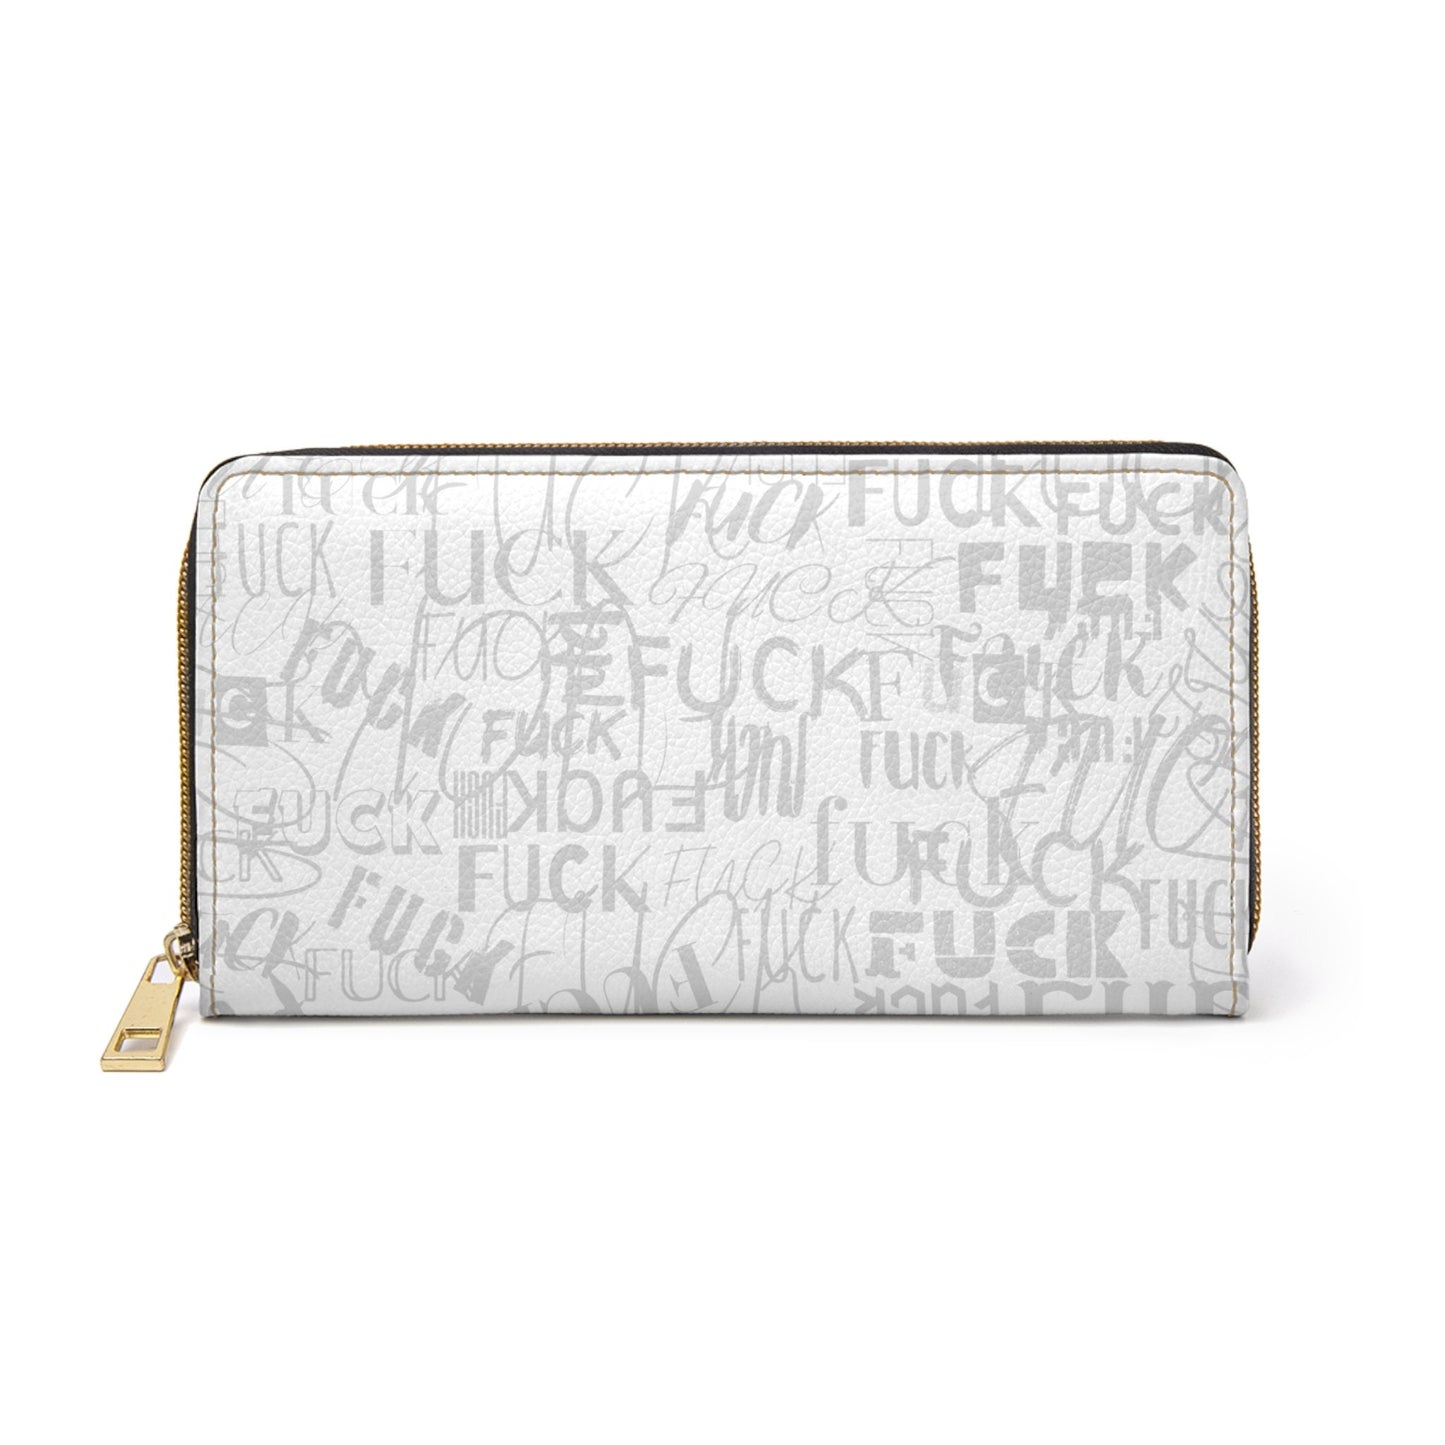 FCK - Fuck Money Zipper Wallet, Funny Cost of Living Joke Purse, White Vegan Leather Wallet, Gift for Mom, Funny Student Gift